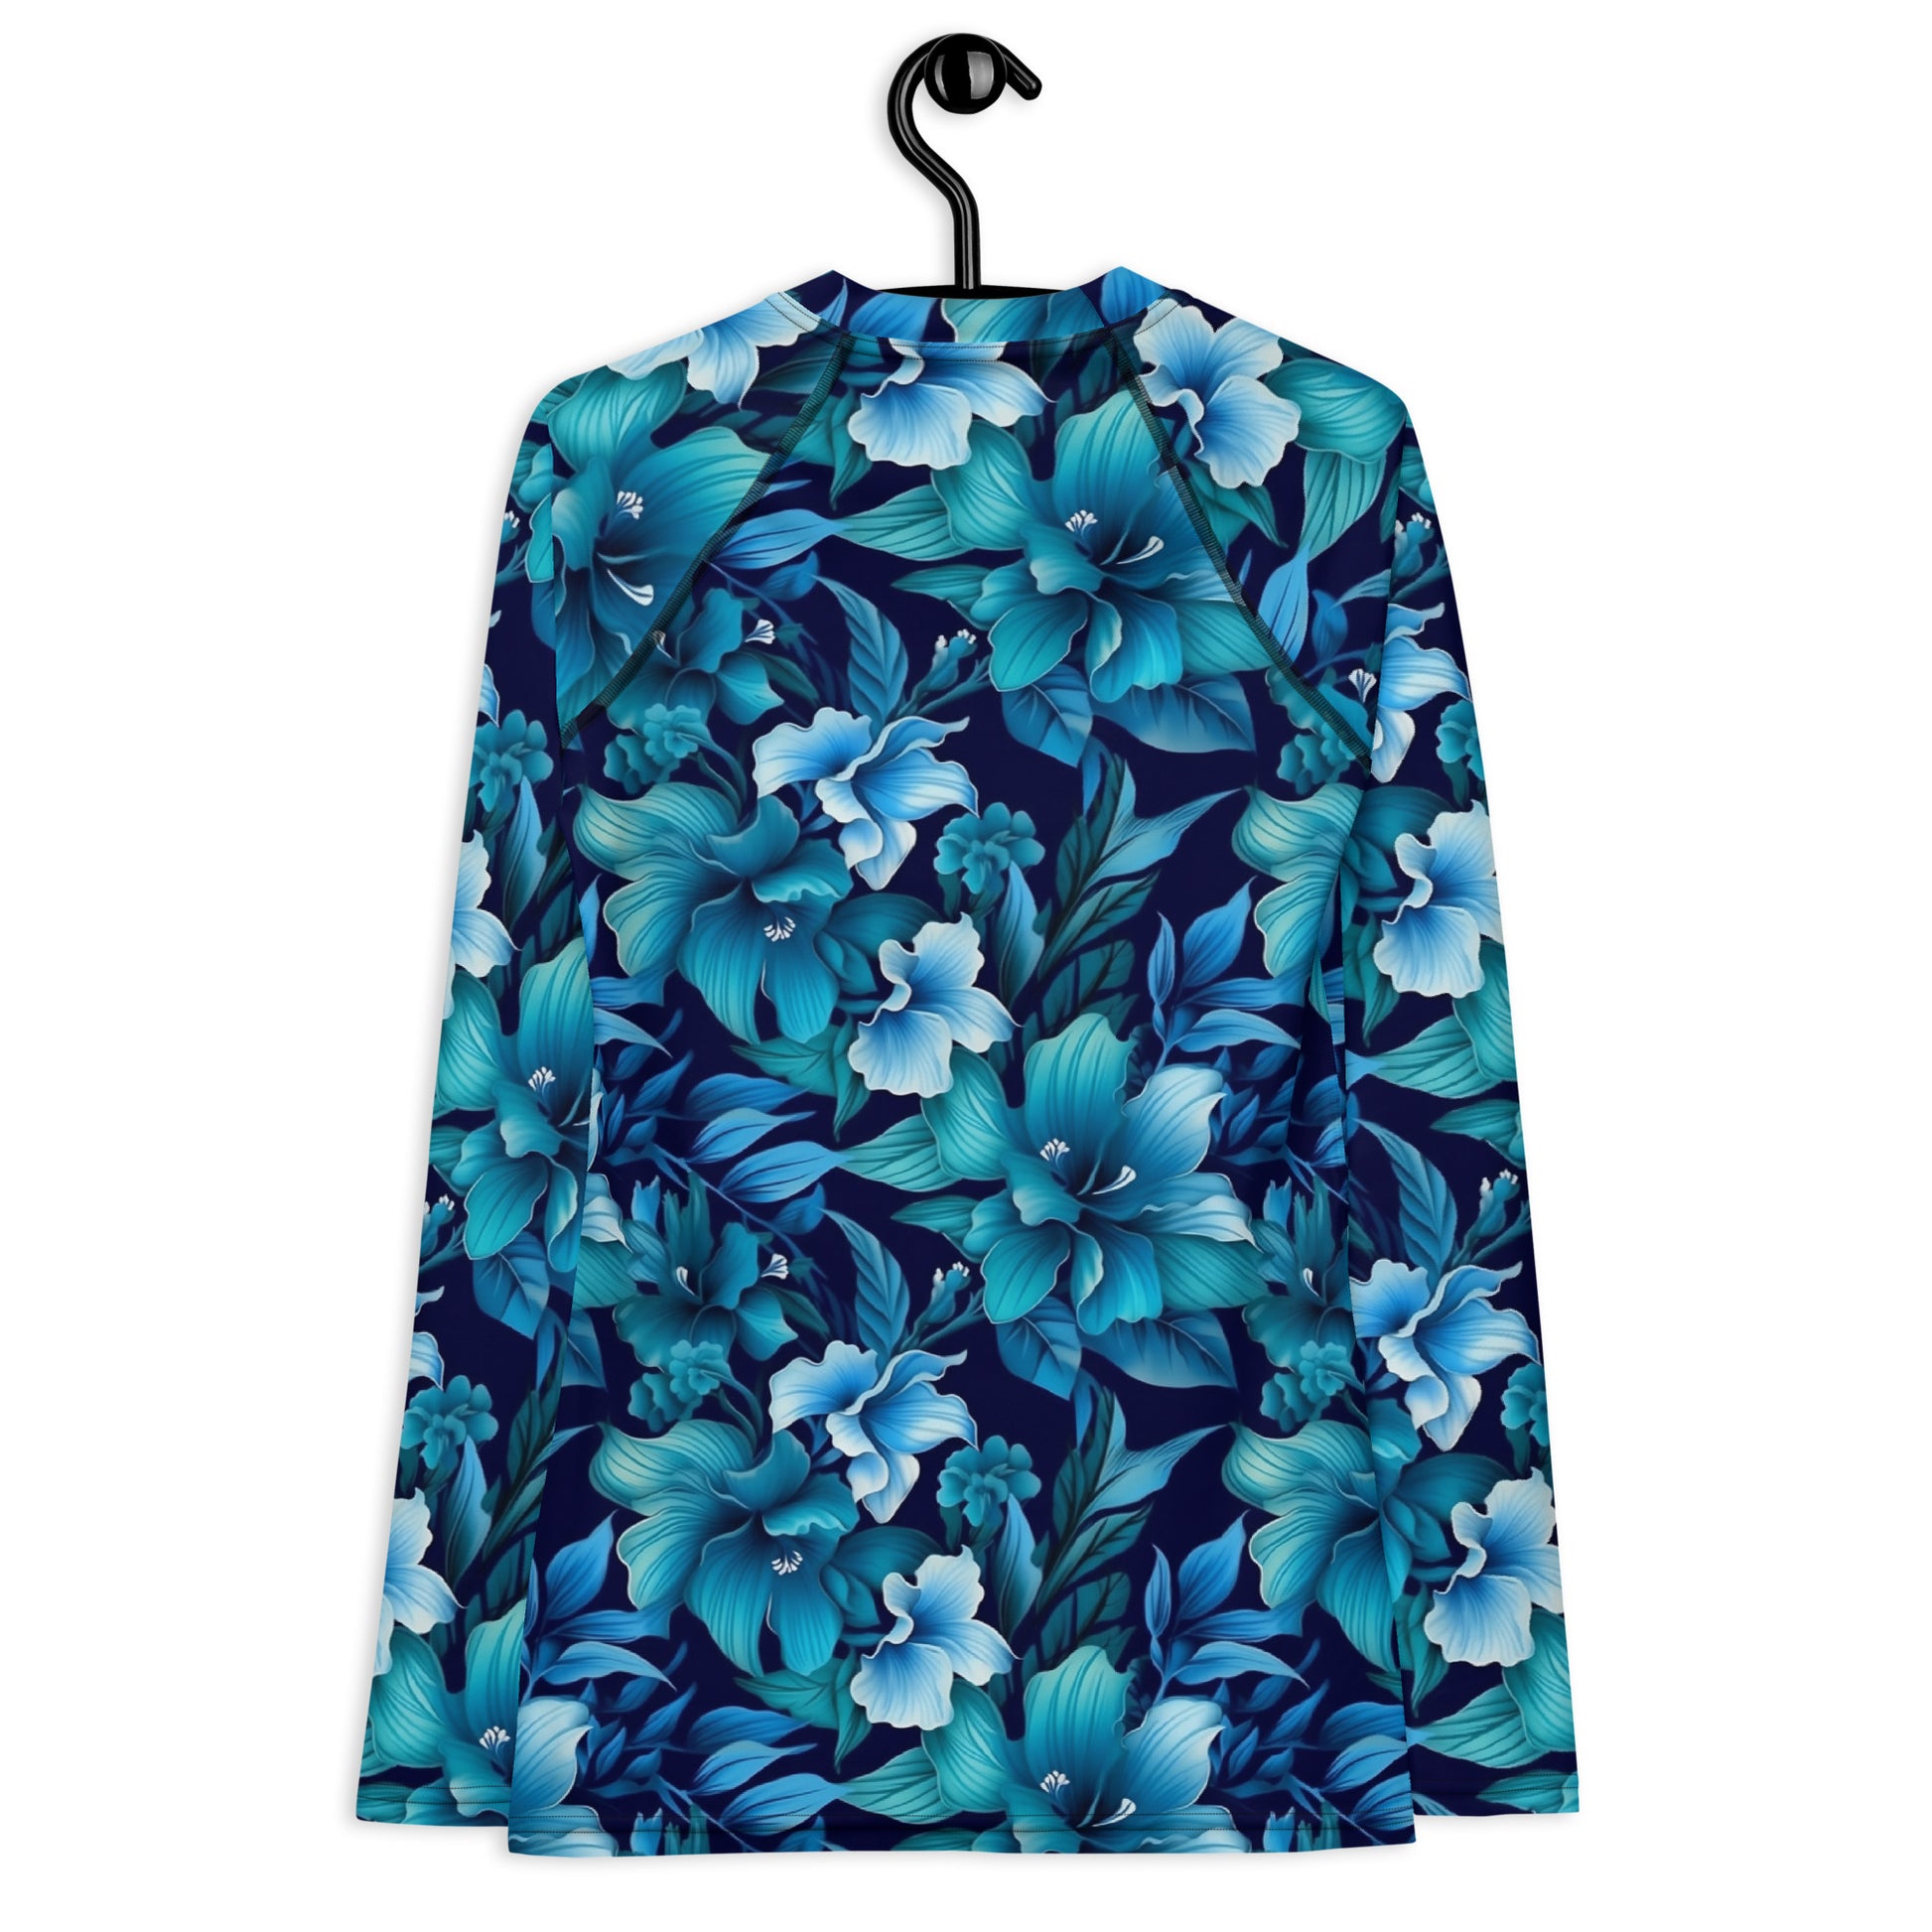 Blue Flowers Women's Rash Guard, Floral Print Surf Long Sleeve Swim Shirt Sun Protection Designer 50 UPF SPF UV Cover Starcove Fashion